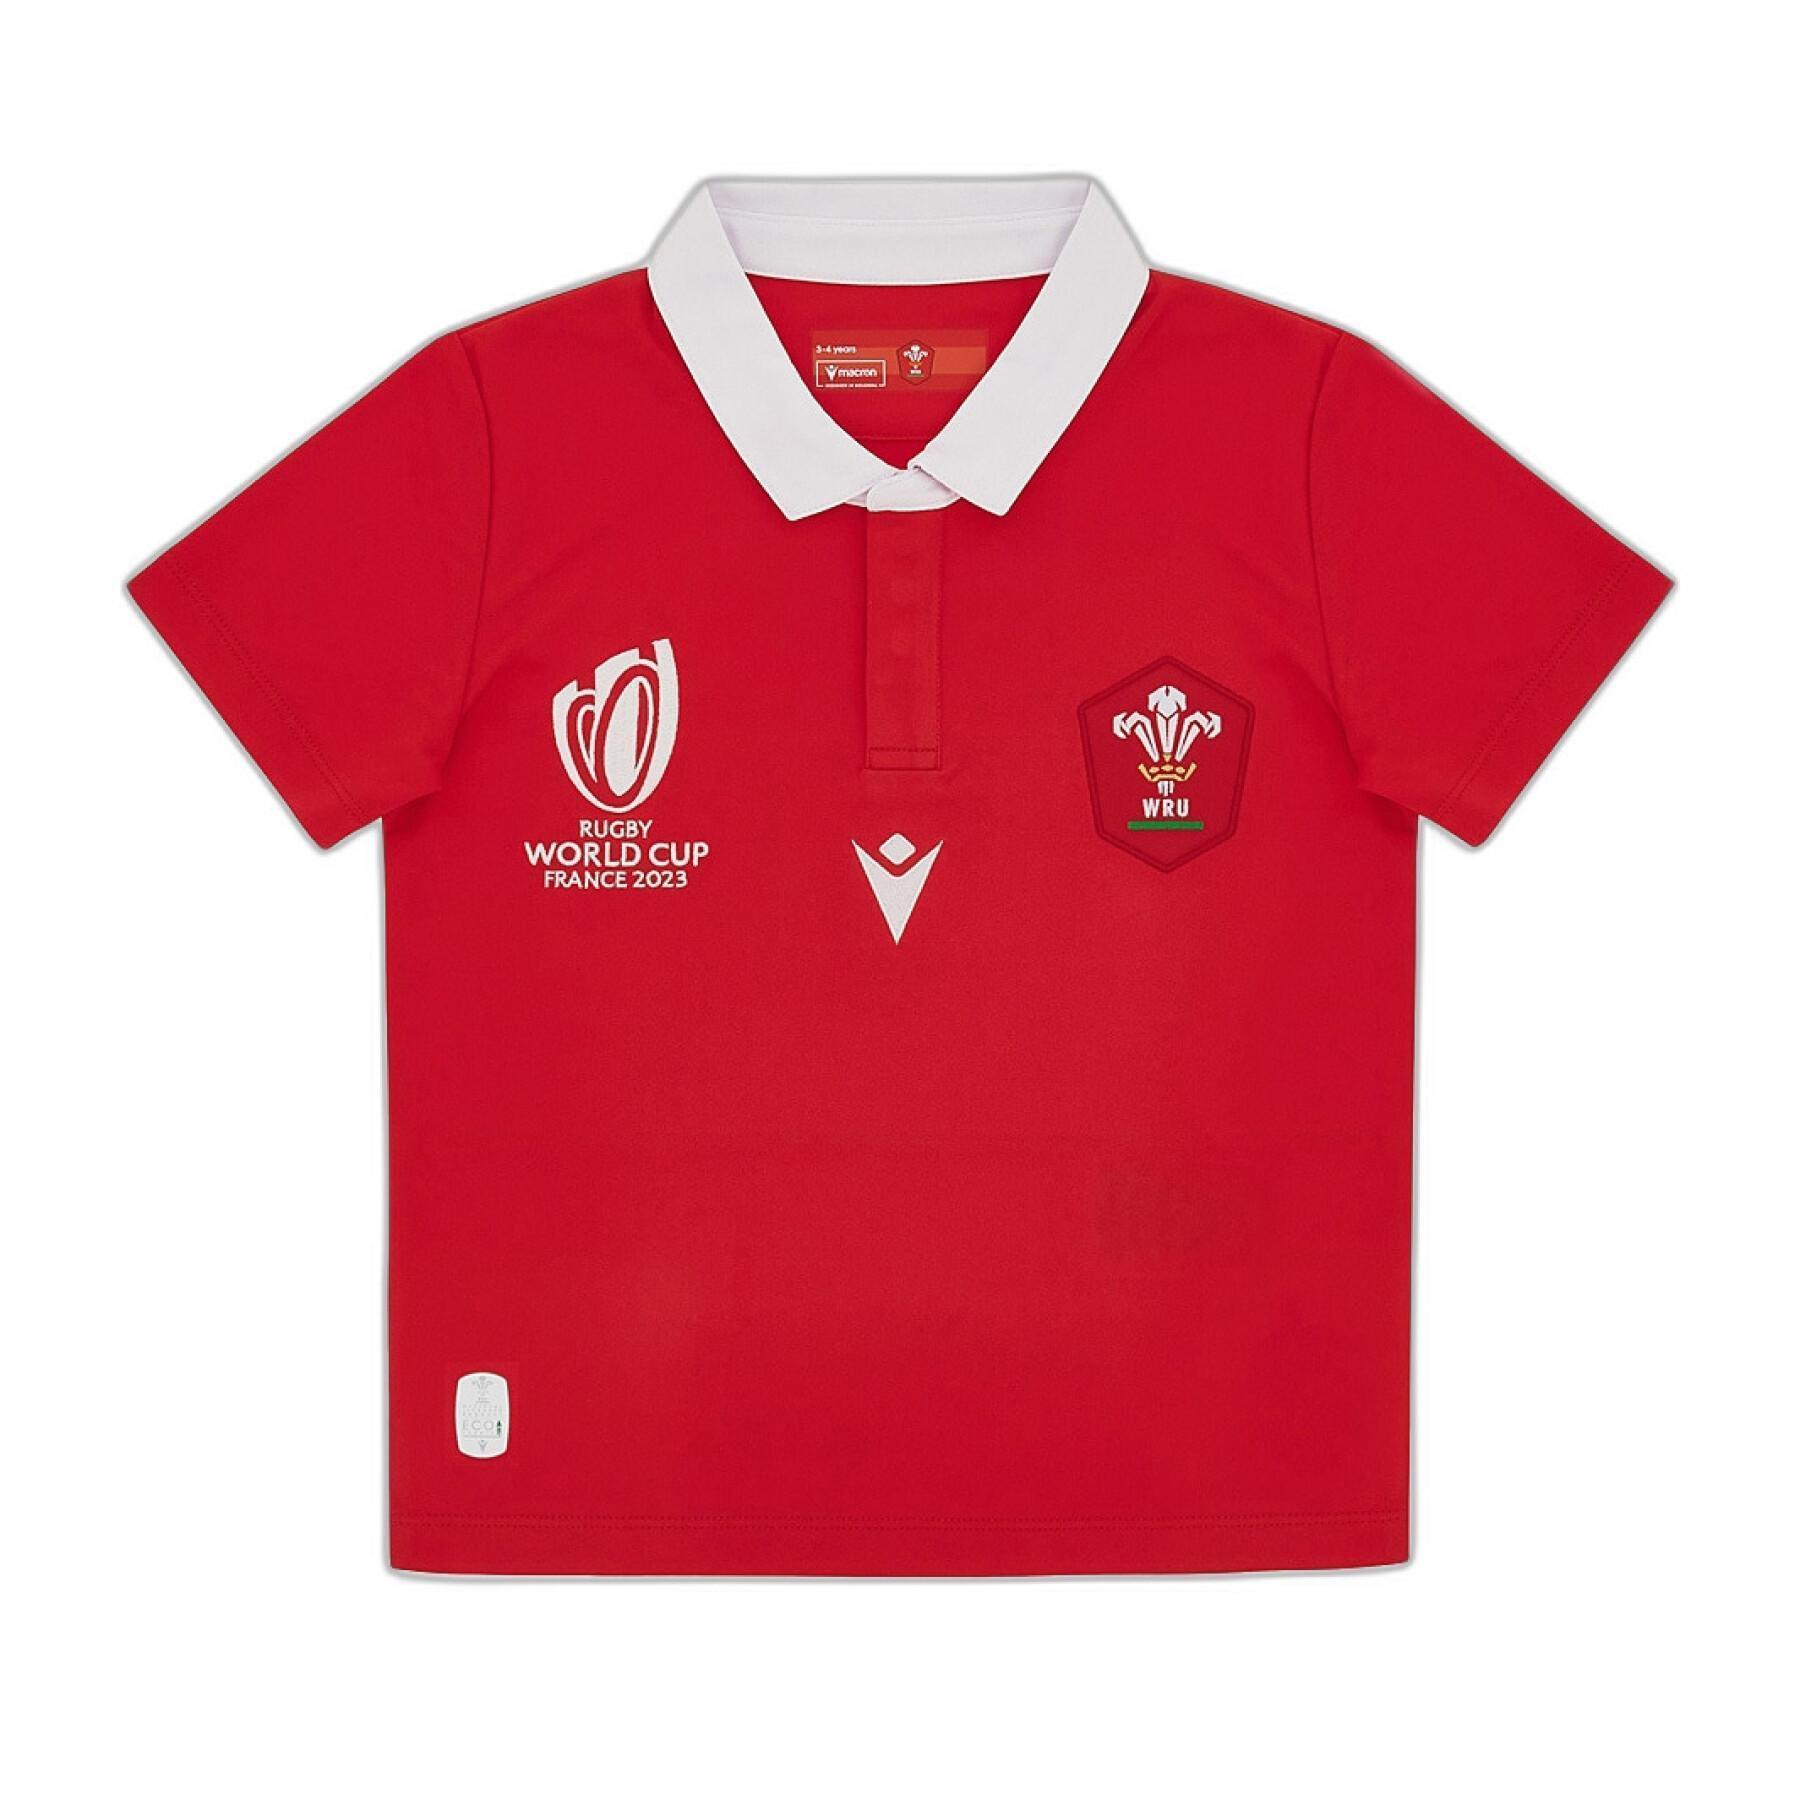 Home jersey child Wales RWC 2023